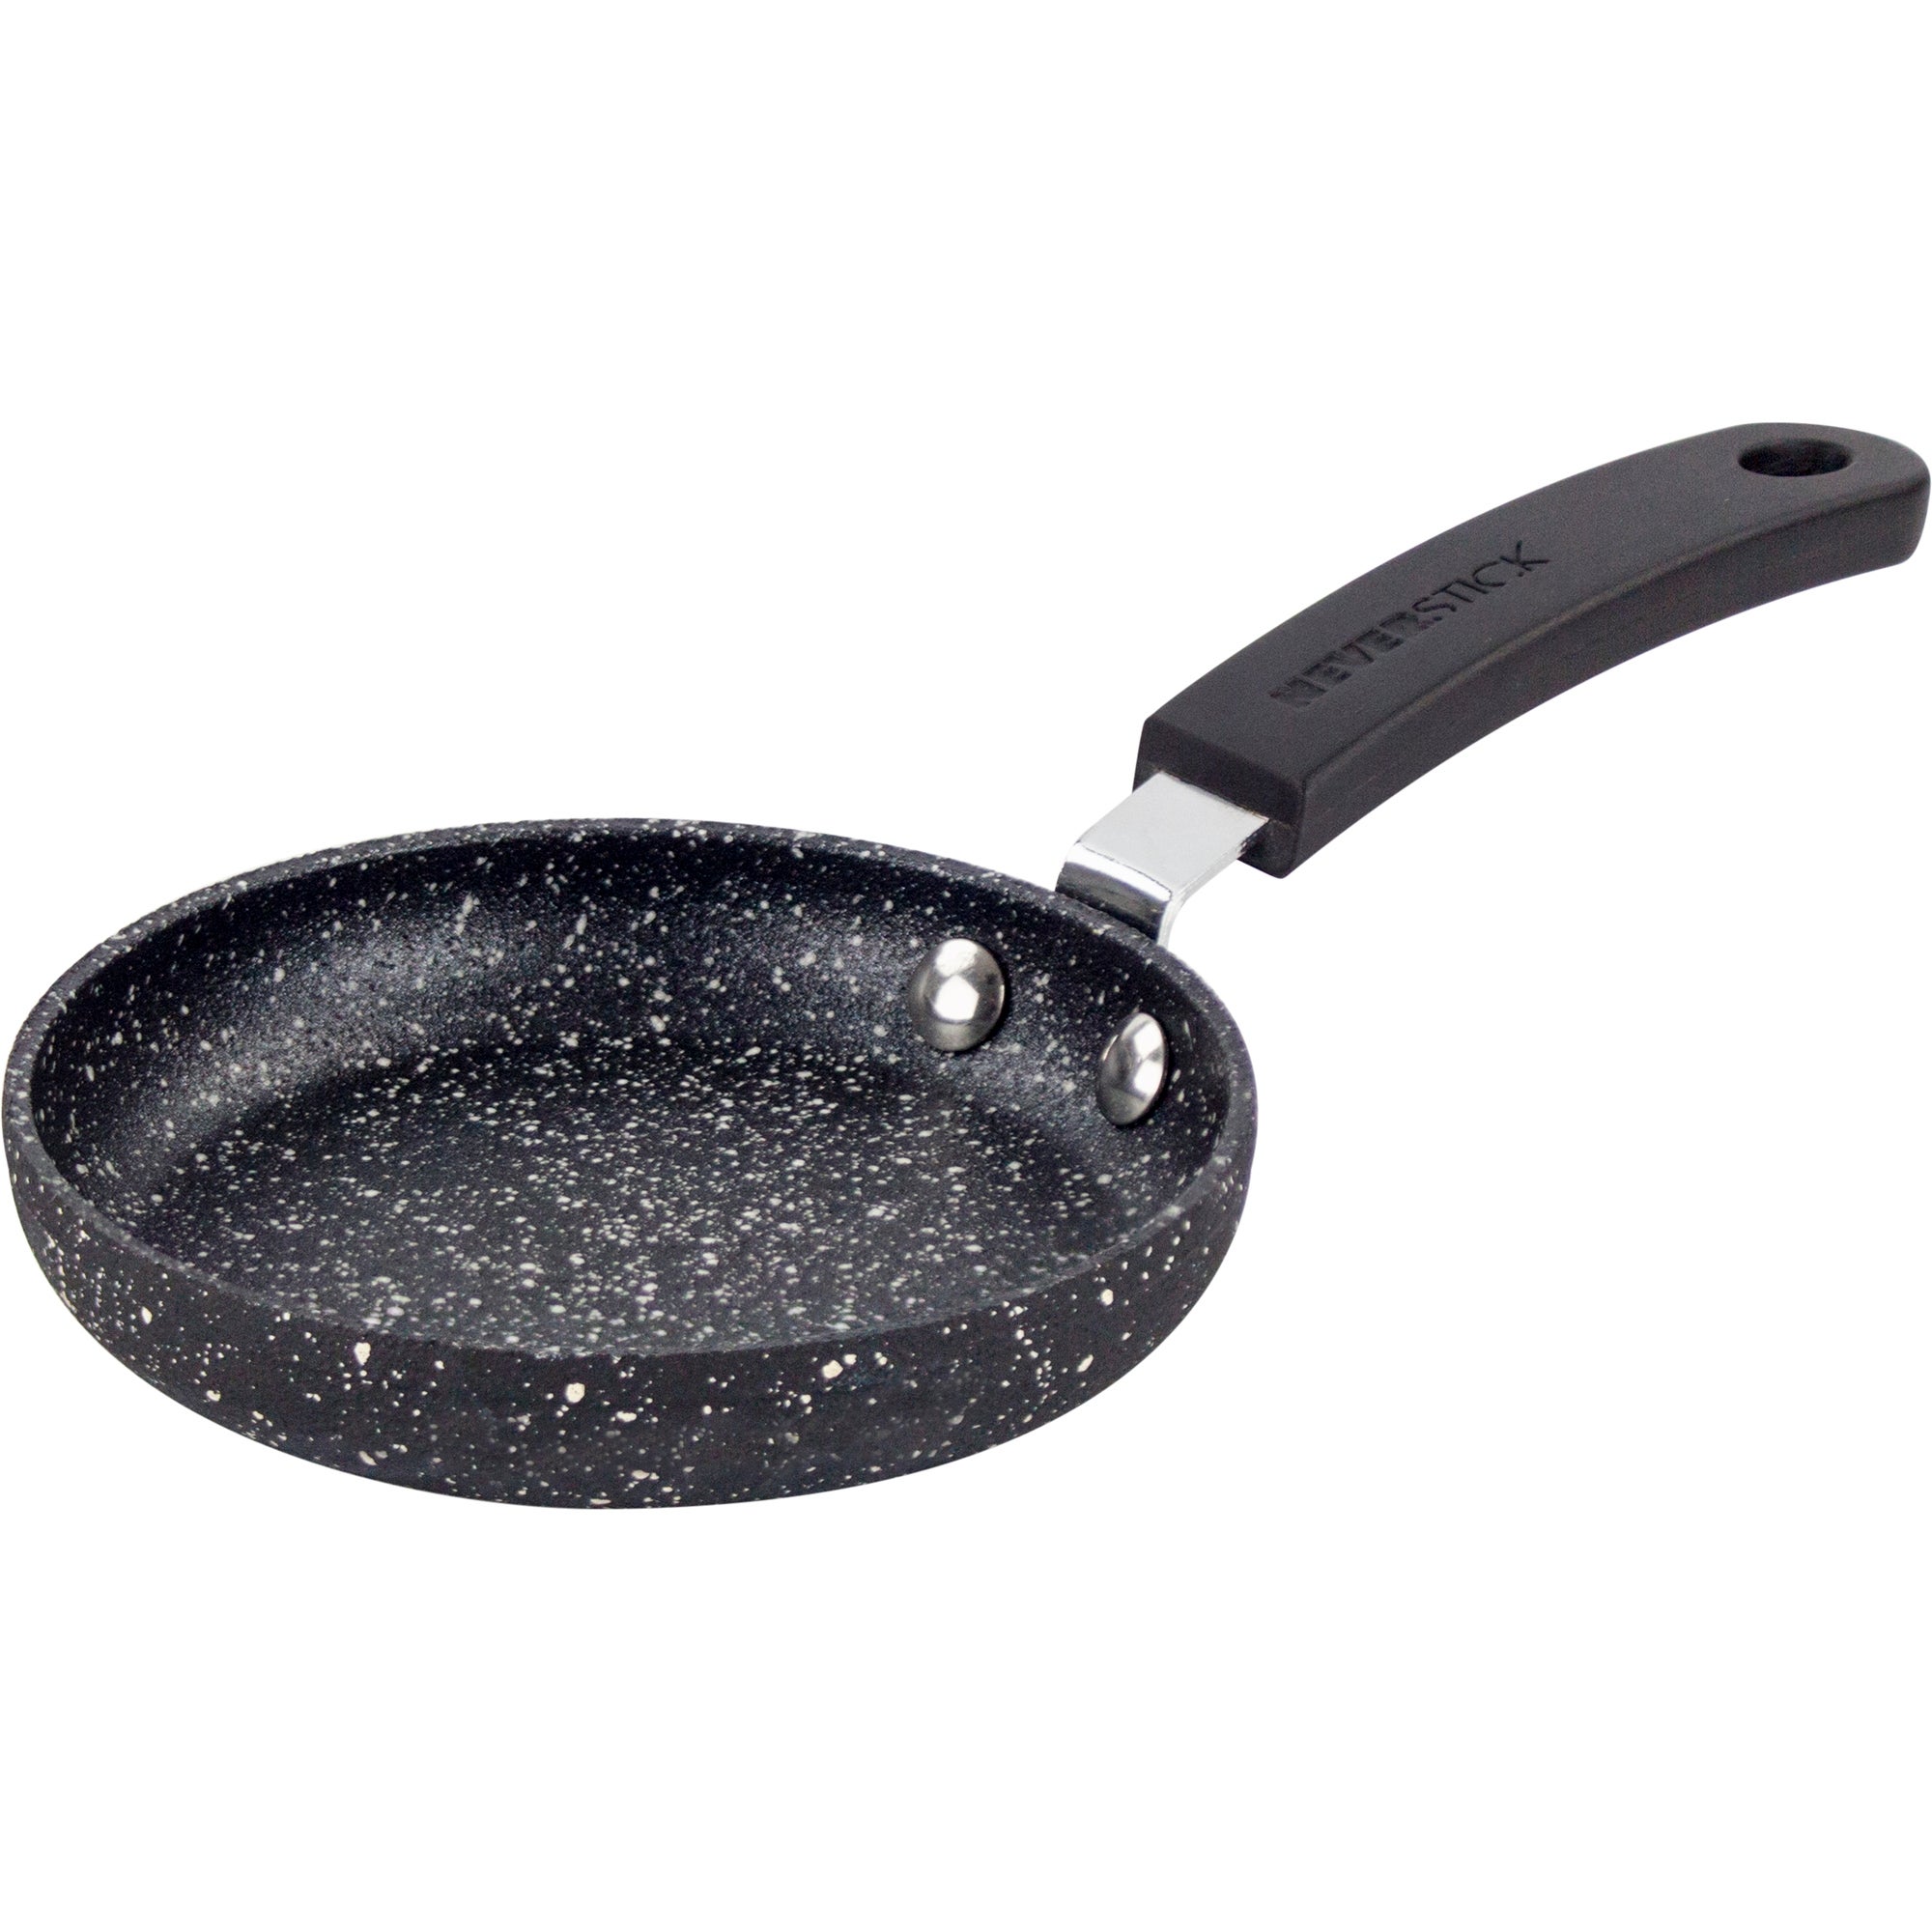  Egg Mini Frying Pan, Black 12cm Mini Household Egg Pan